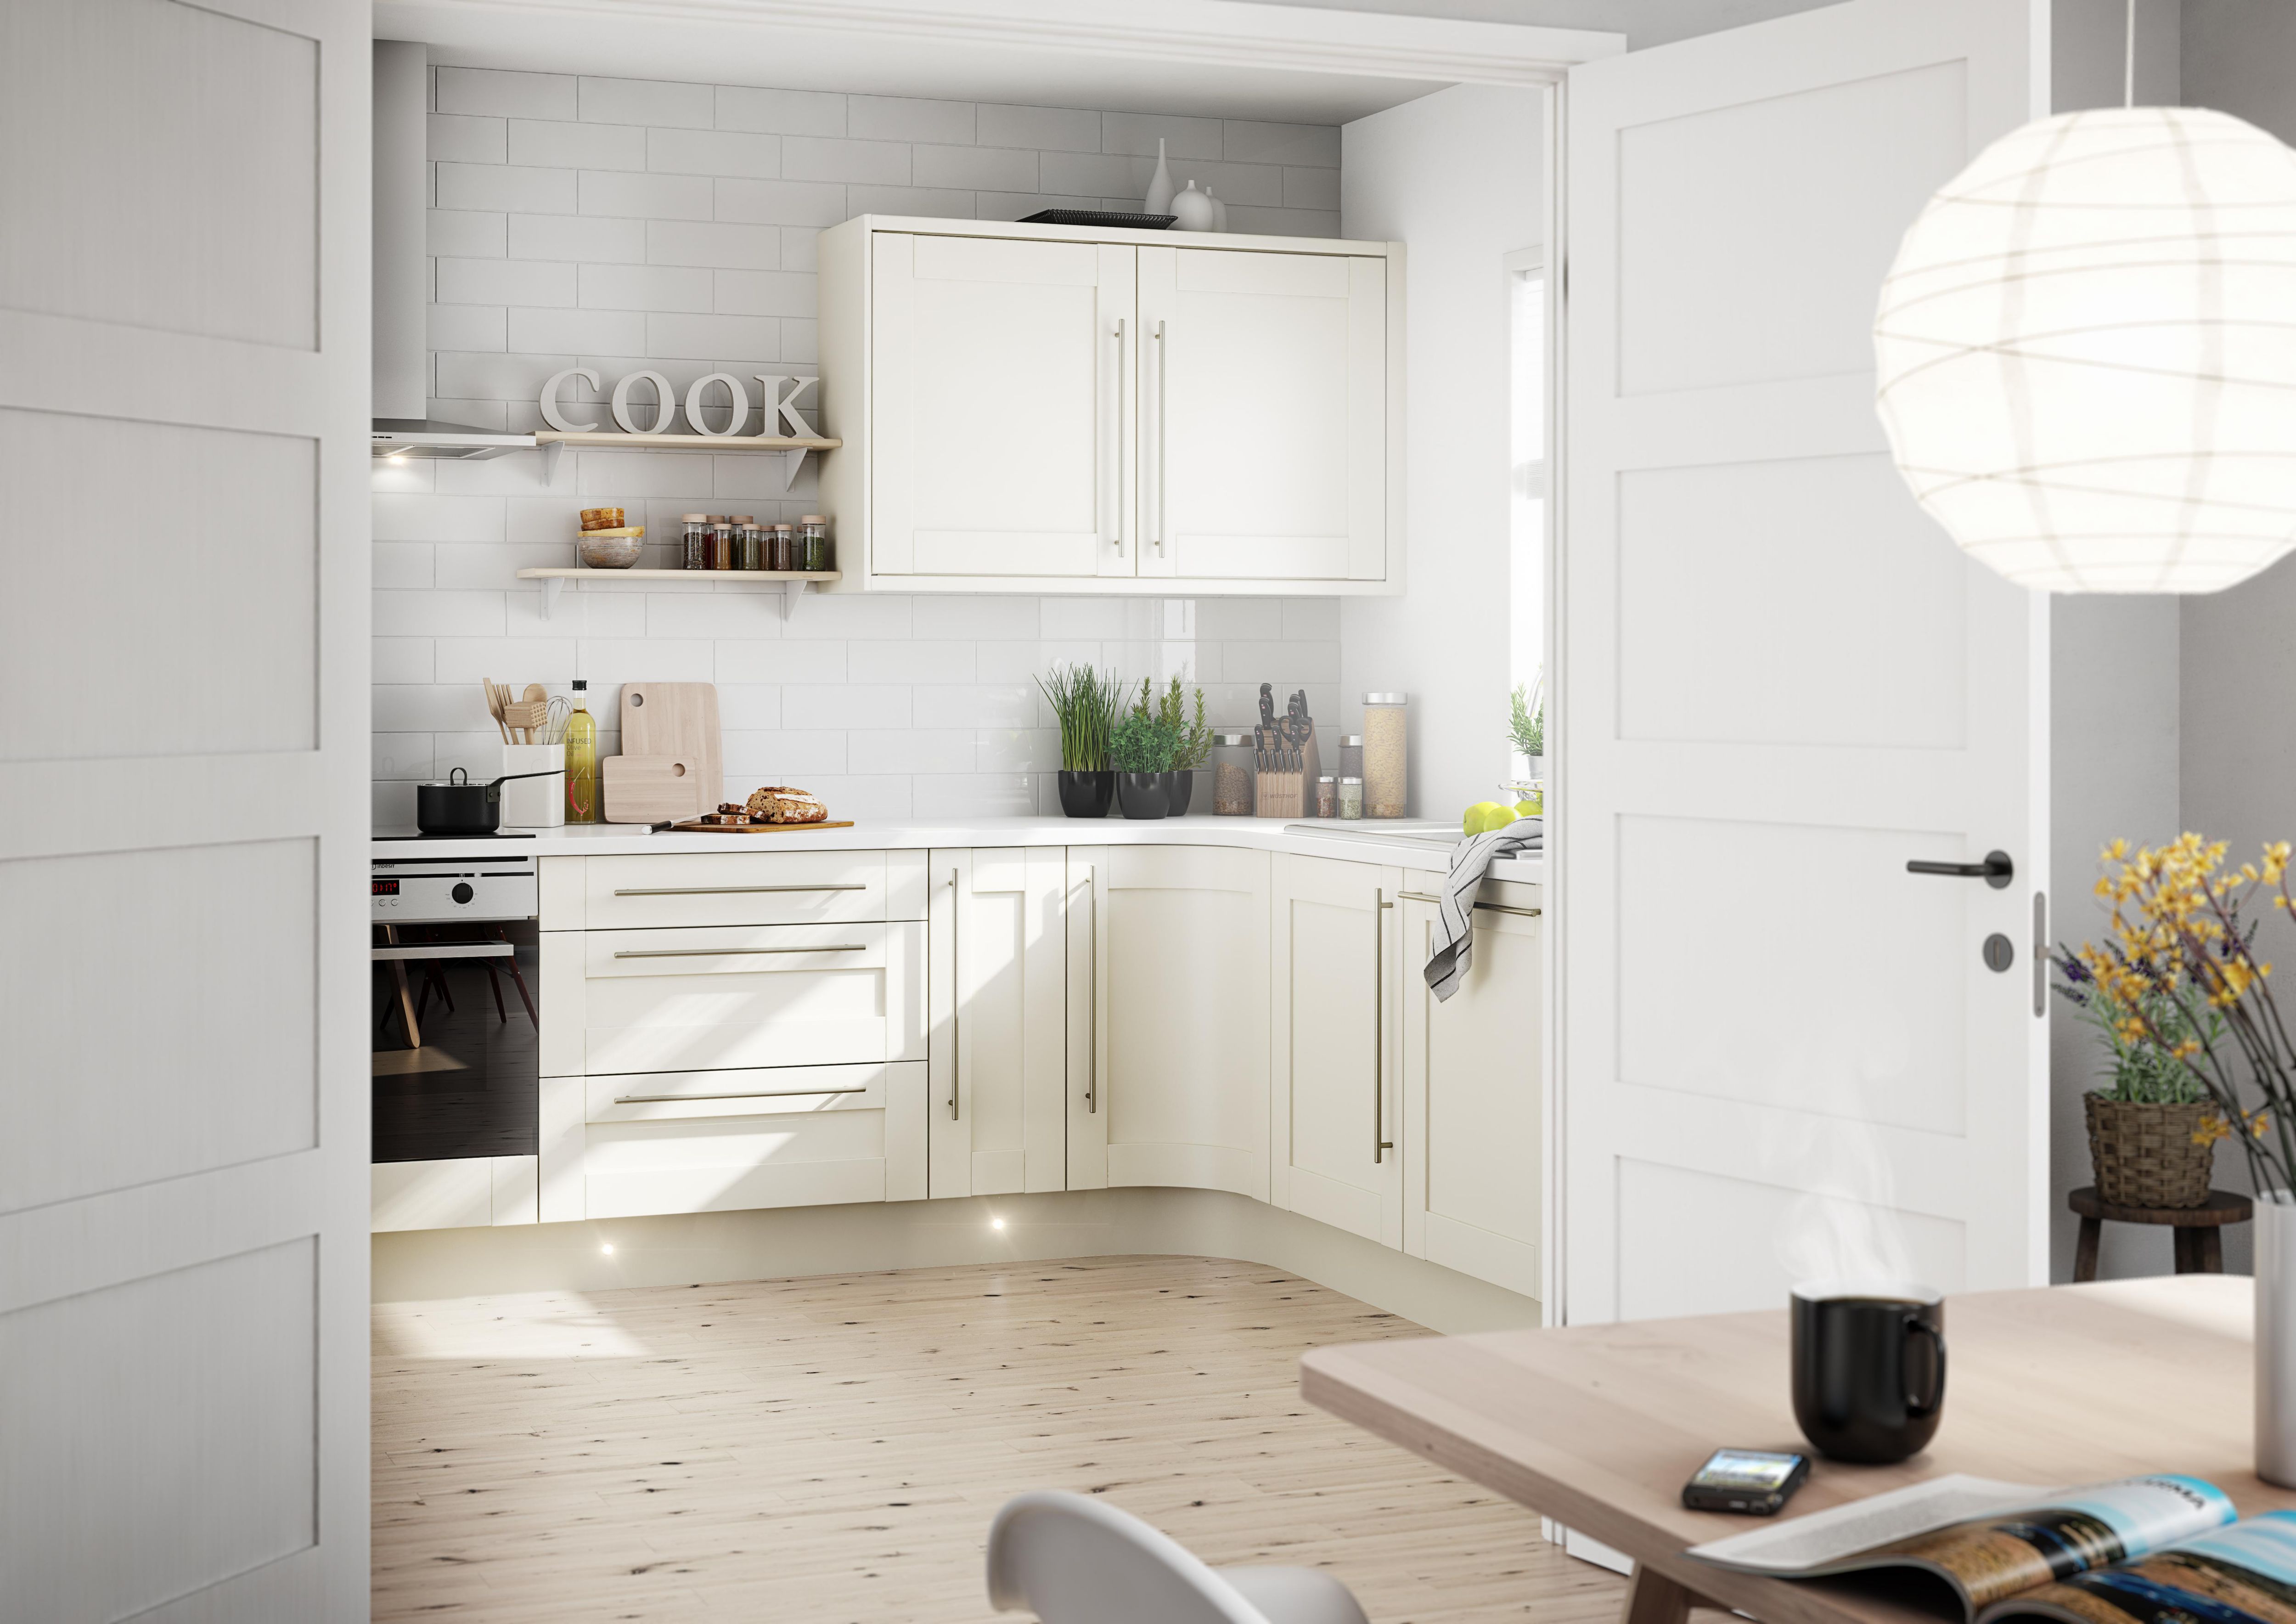 Scandinavian kitchen design ideas | Help & Ideas | DIY at B&Q